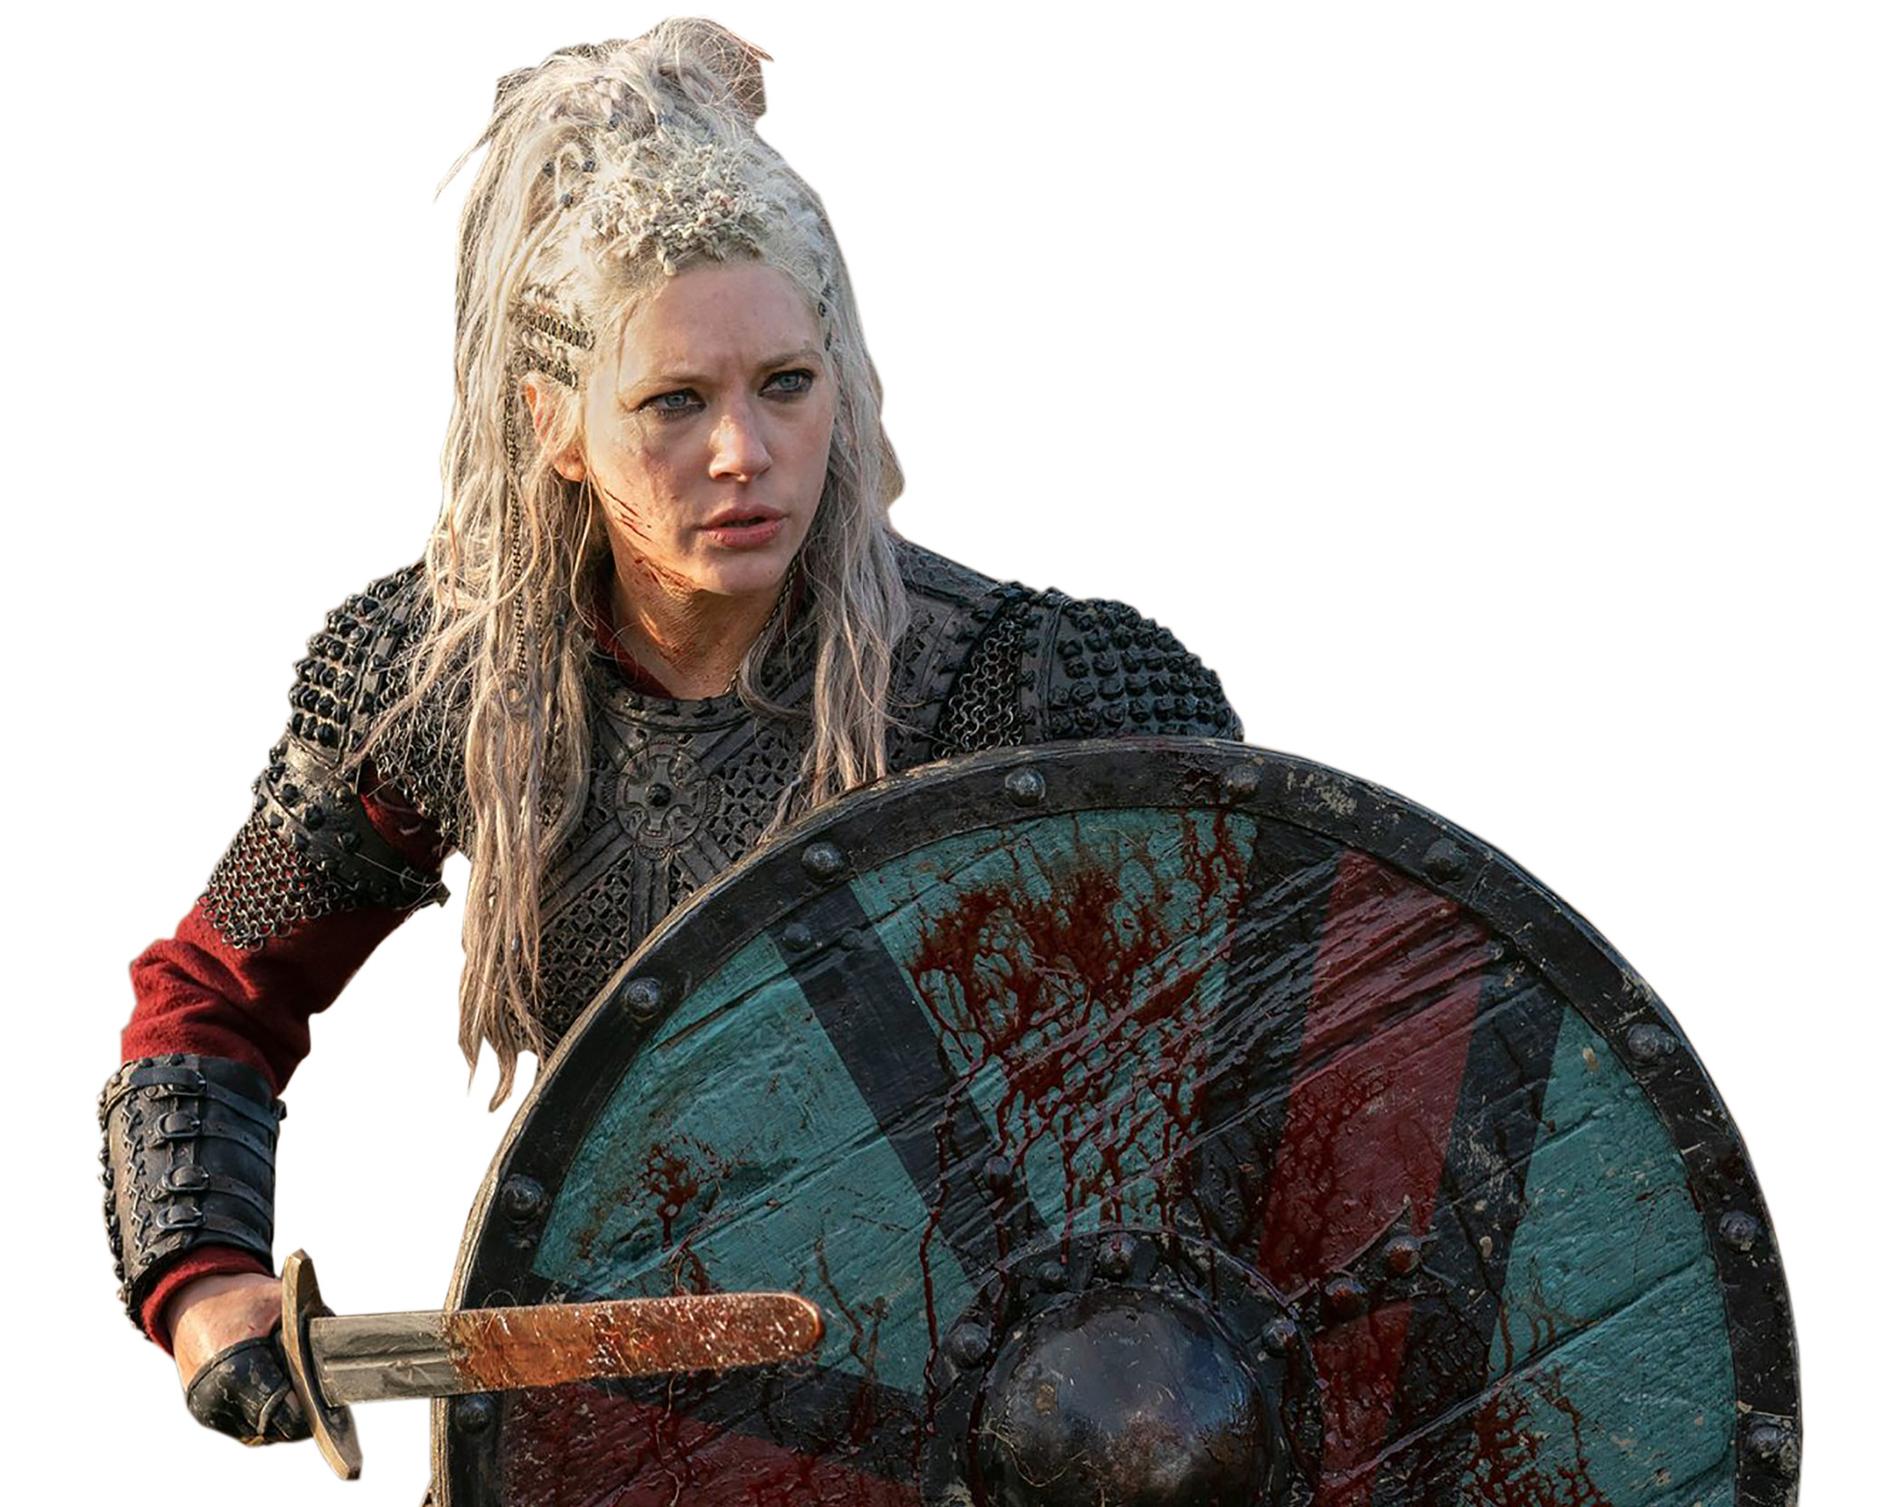 Sköldmön Lagertha (spelad av Katheryn Winnick) i tv-serien ”Vikings”. 